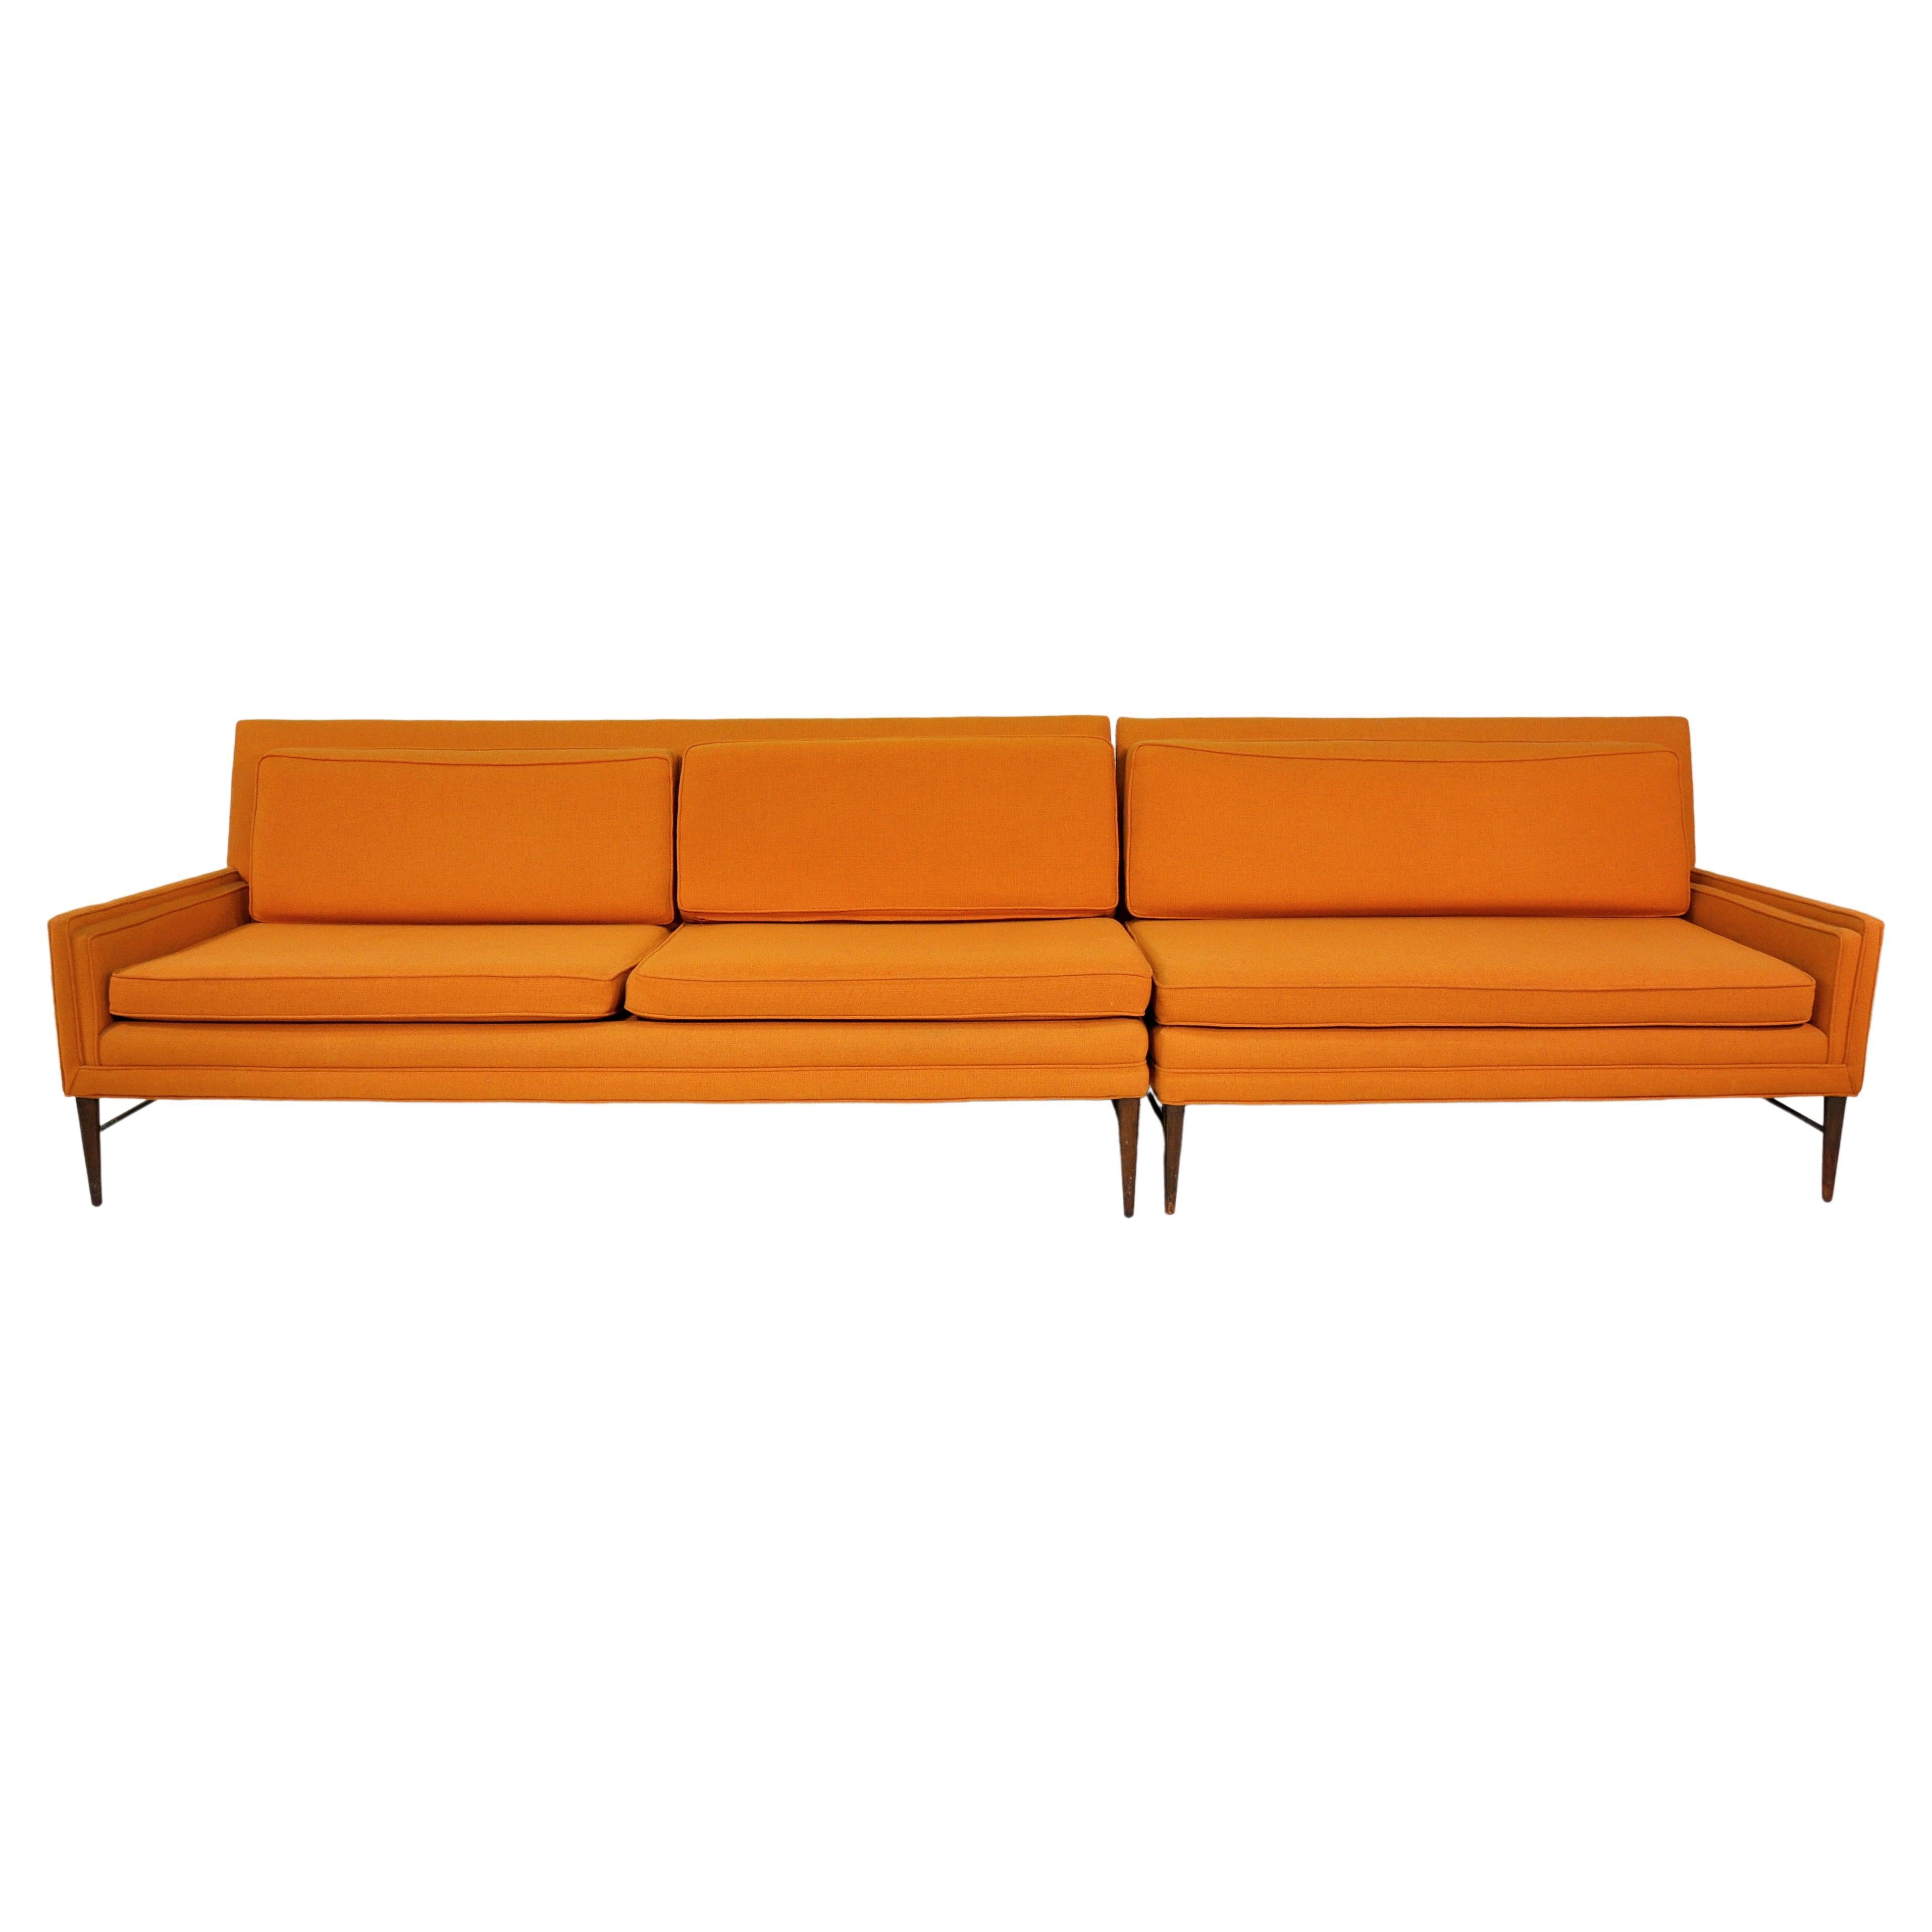 McCobb Walnut and Brass Burnt Orange Sectional Sofa For Sale